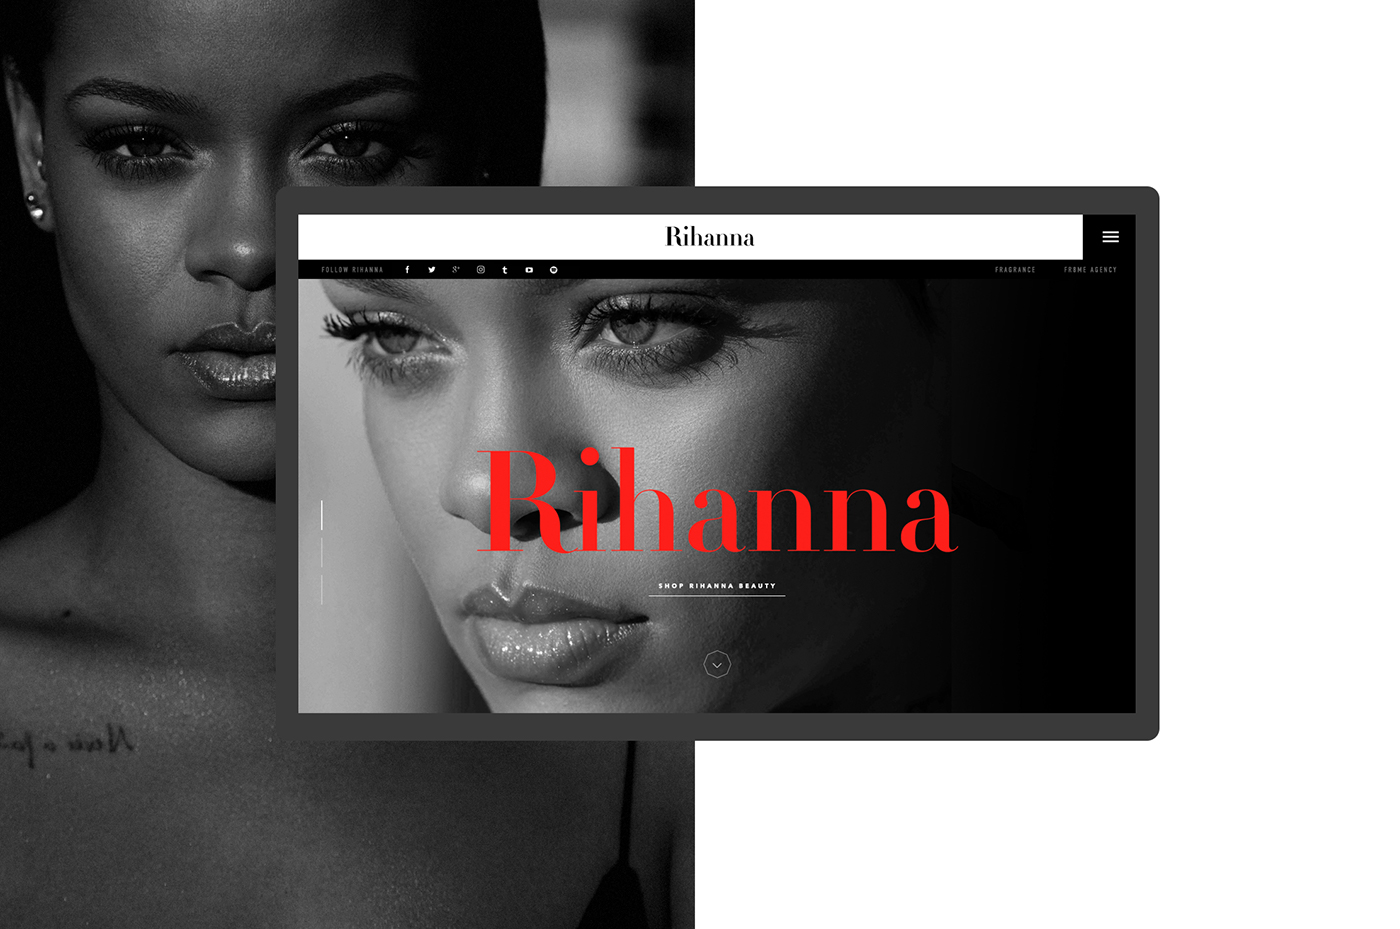 Rihanna Singer artist promosite homepage black clean Fashion 